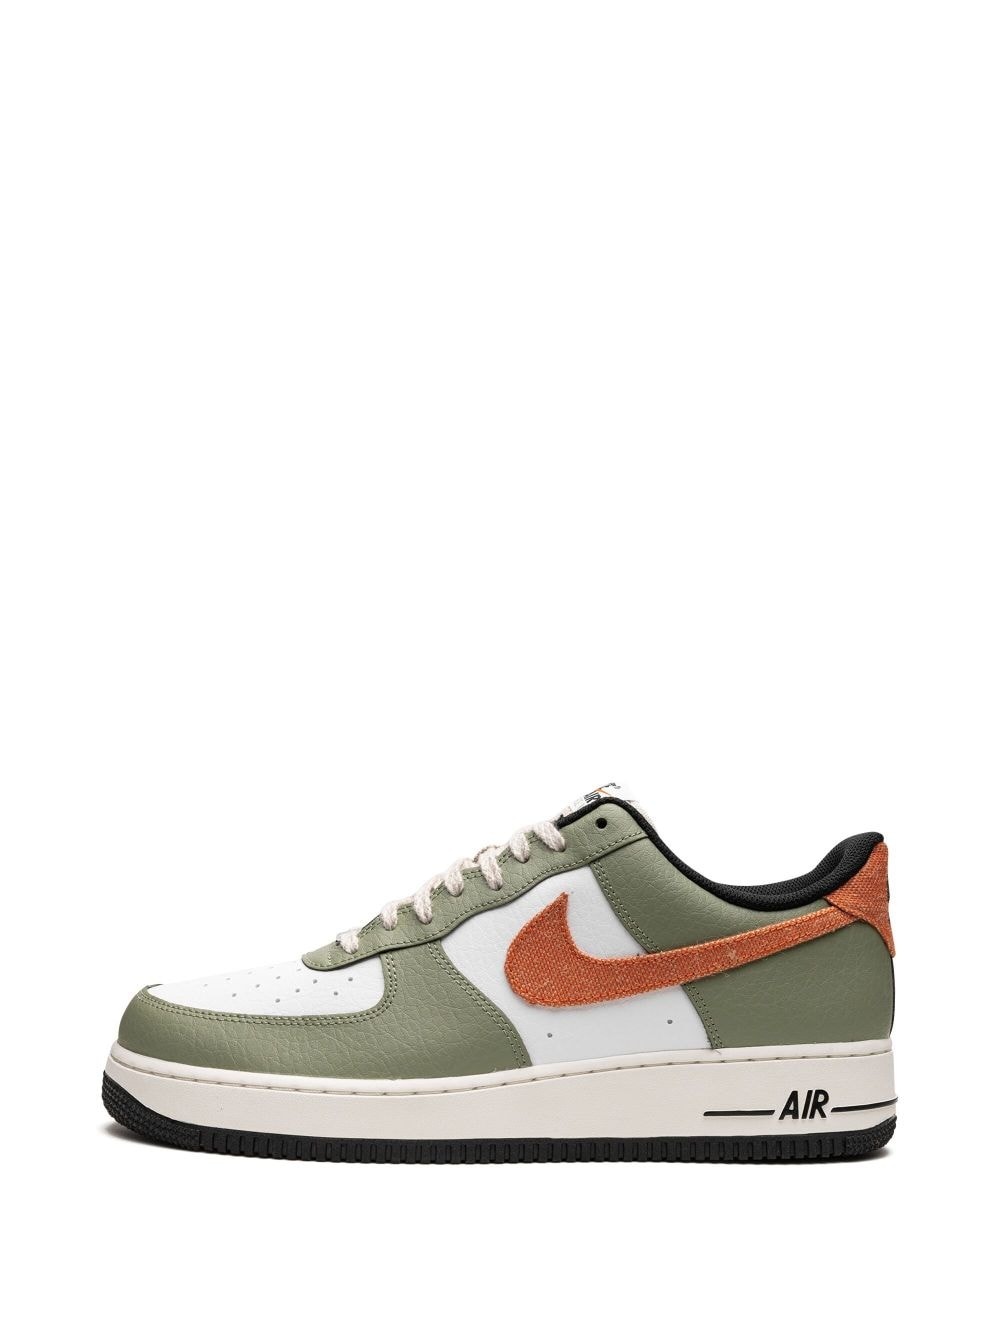 Air Force 1 Low "Oil Green" sneakers - 5